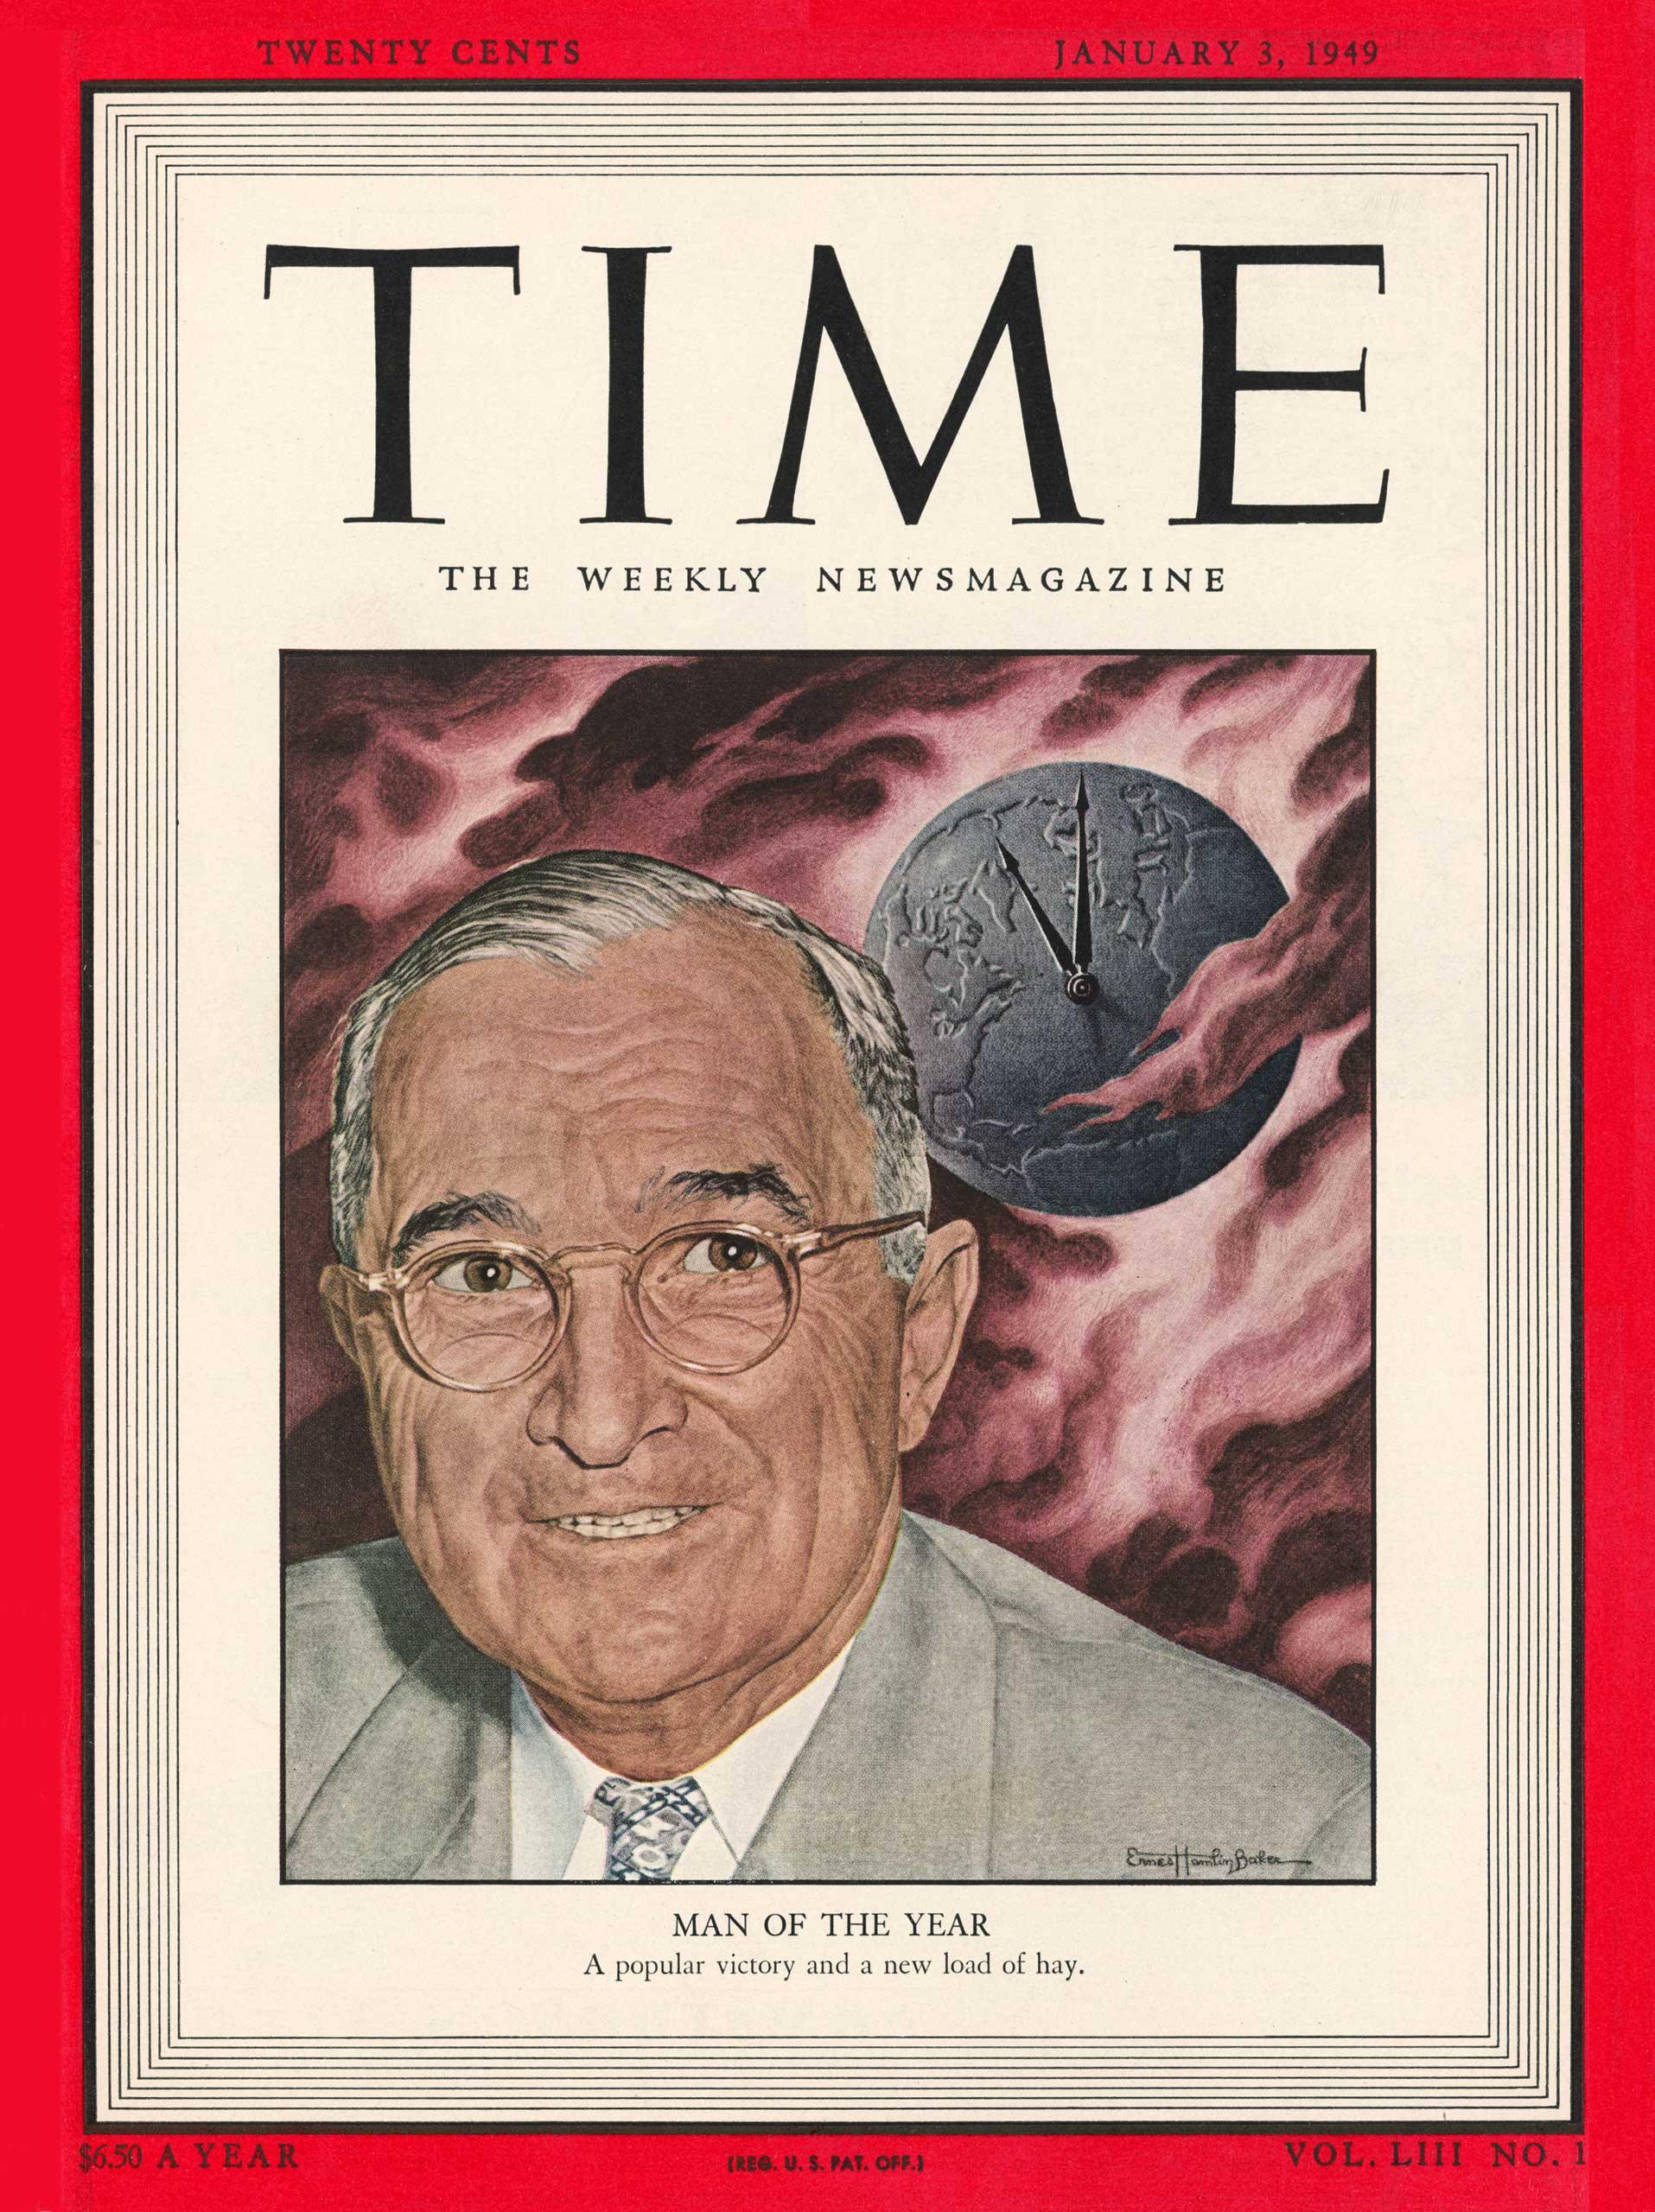 1948: President Harry S. Truman